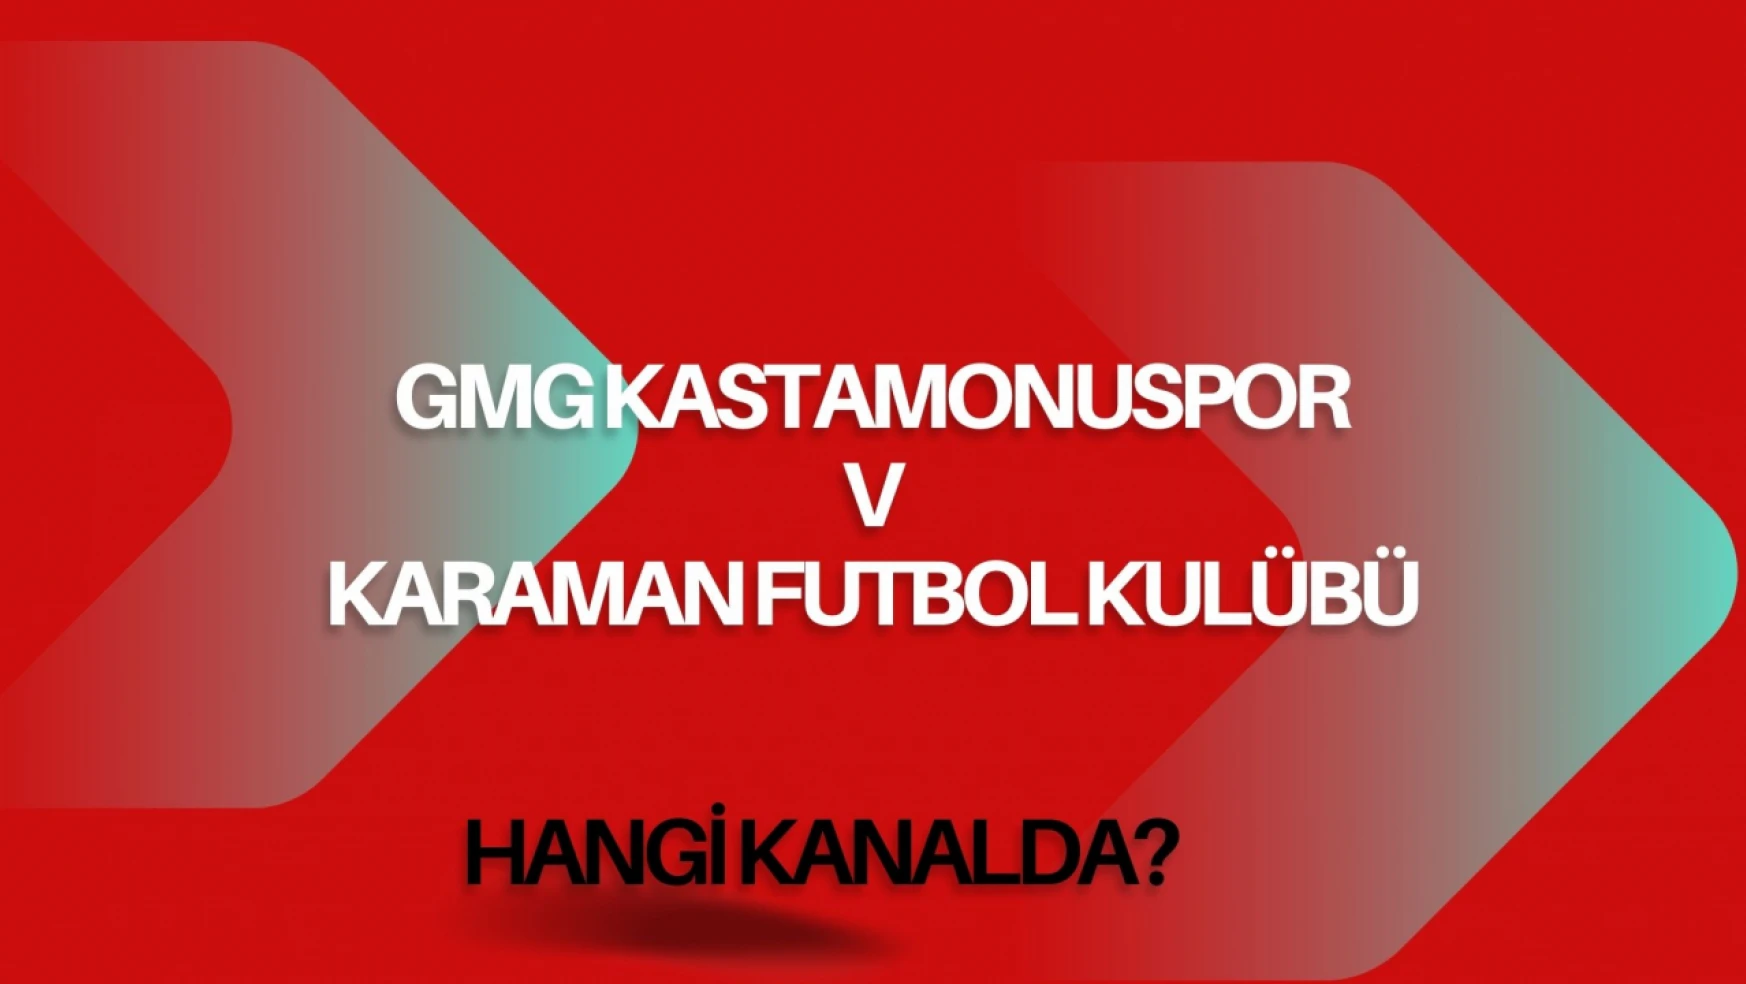 GMG Kastamonuspor-Karaman Futbol Kulübü Maçı Hangi Kanalda?